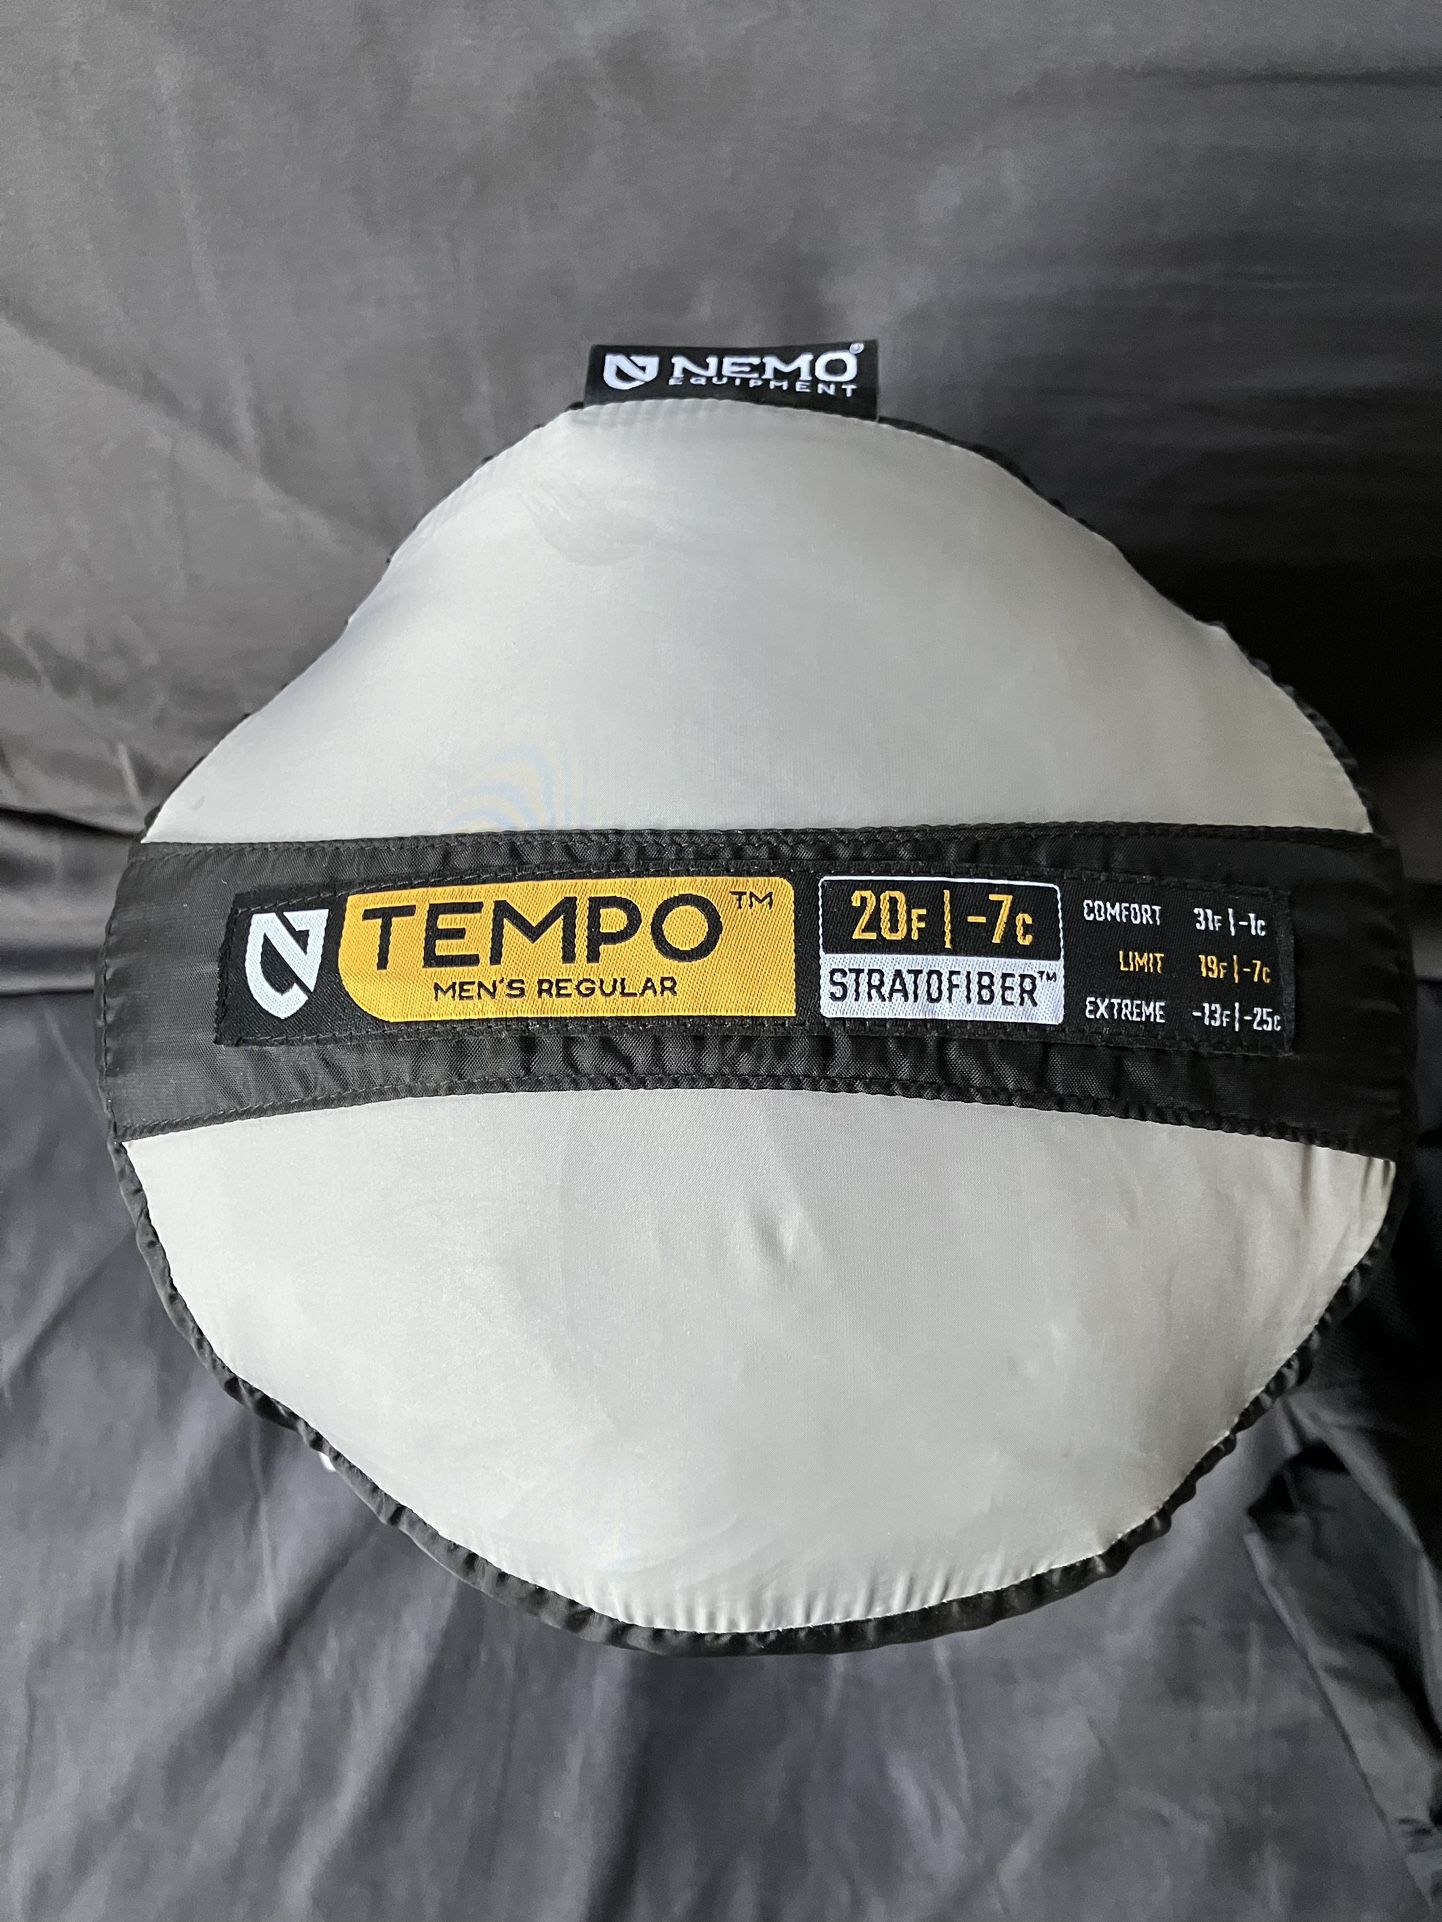 Nemo Tempo 20f Sleeping Bag 